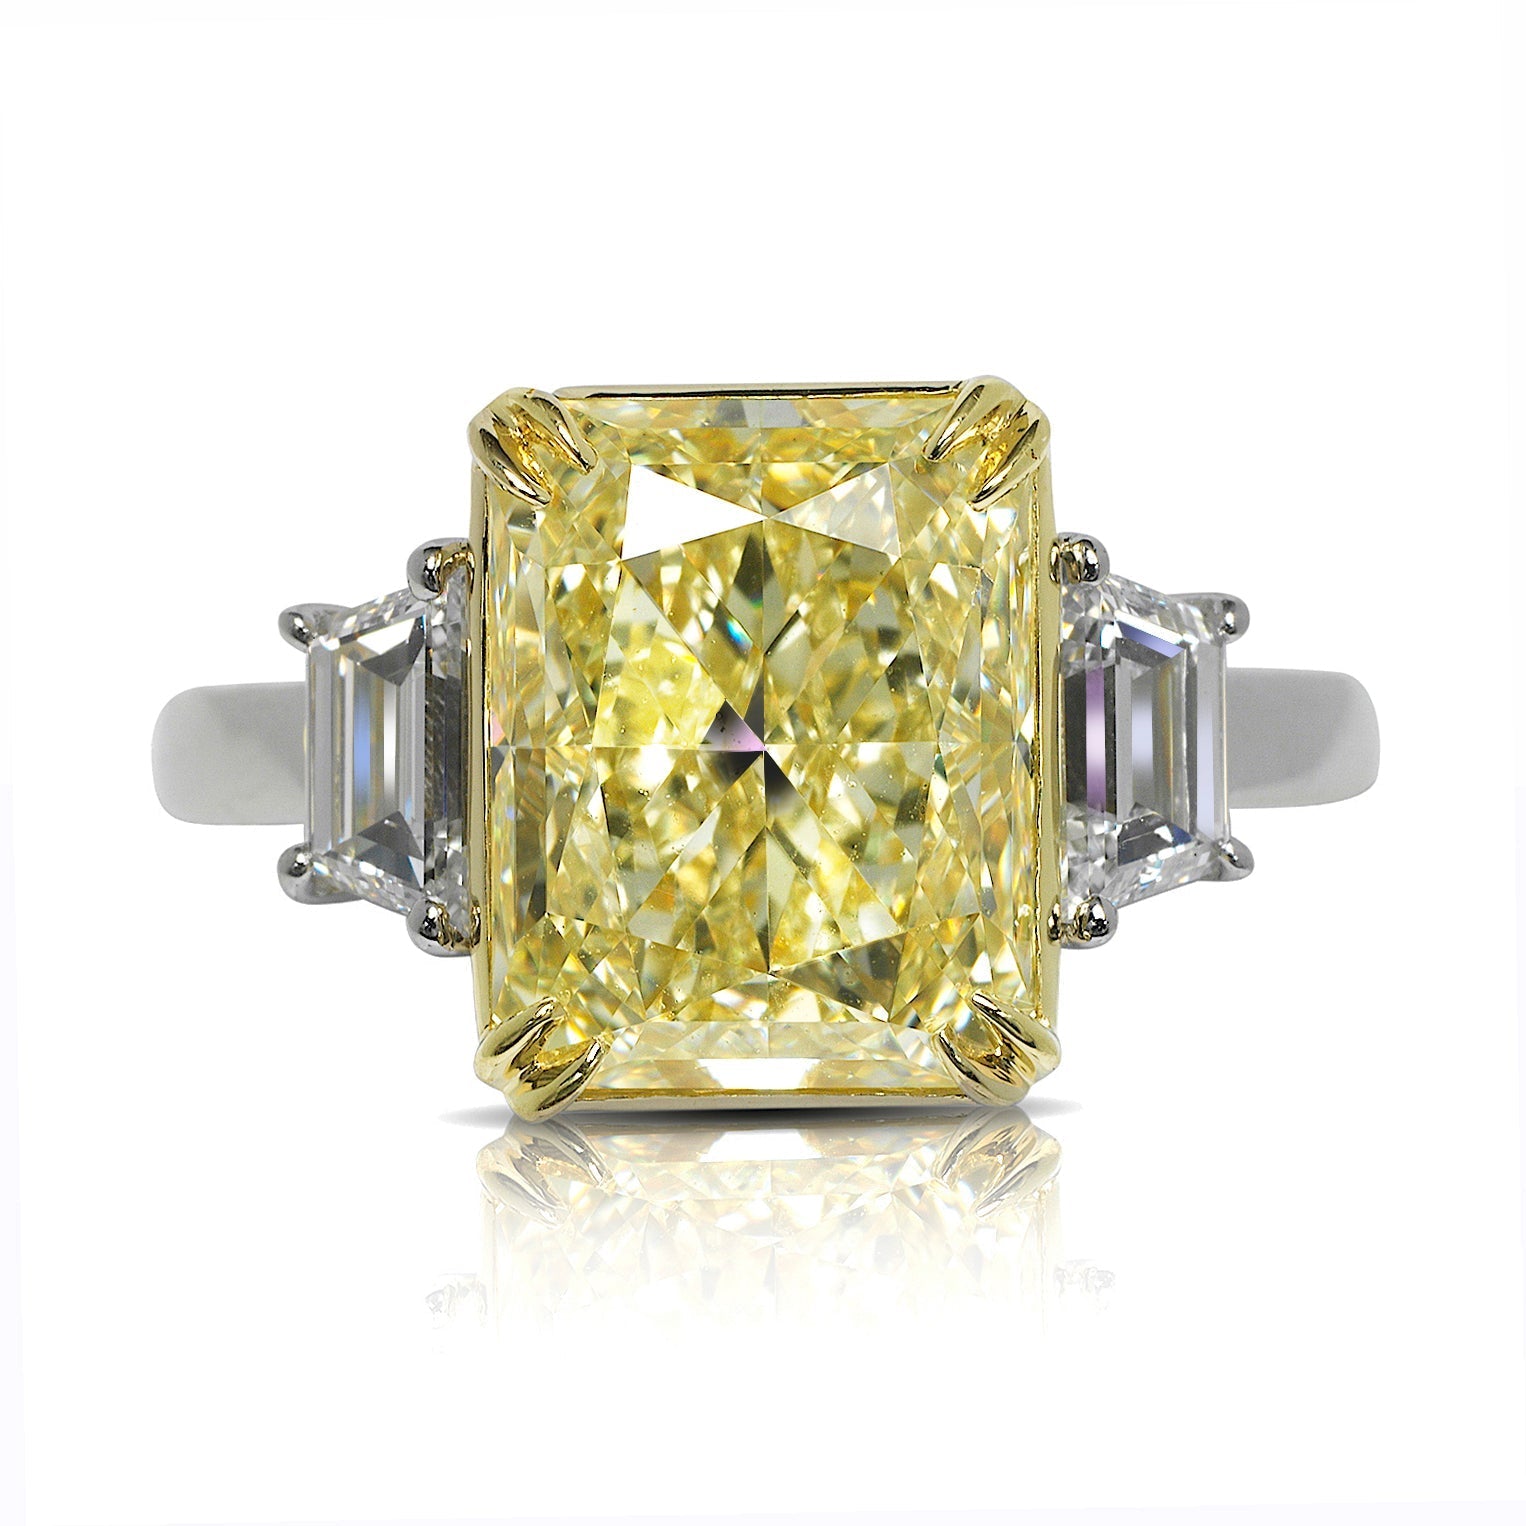 Light Yellow Diamond Ring Radiant Cut 6 Carat Three Stone Ring in Platinum Front View